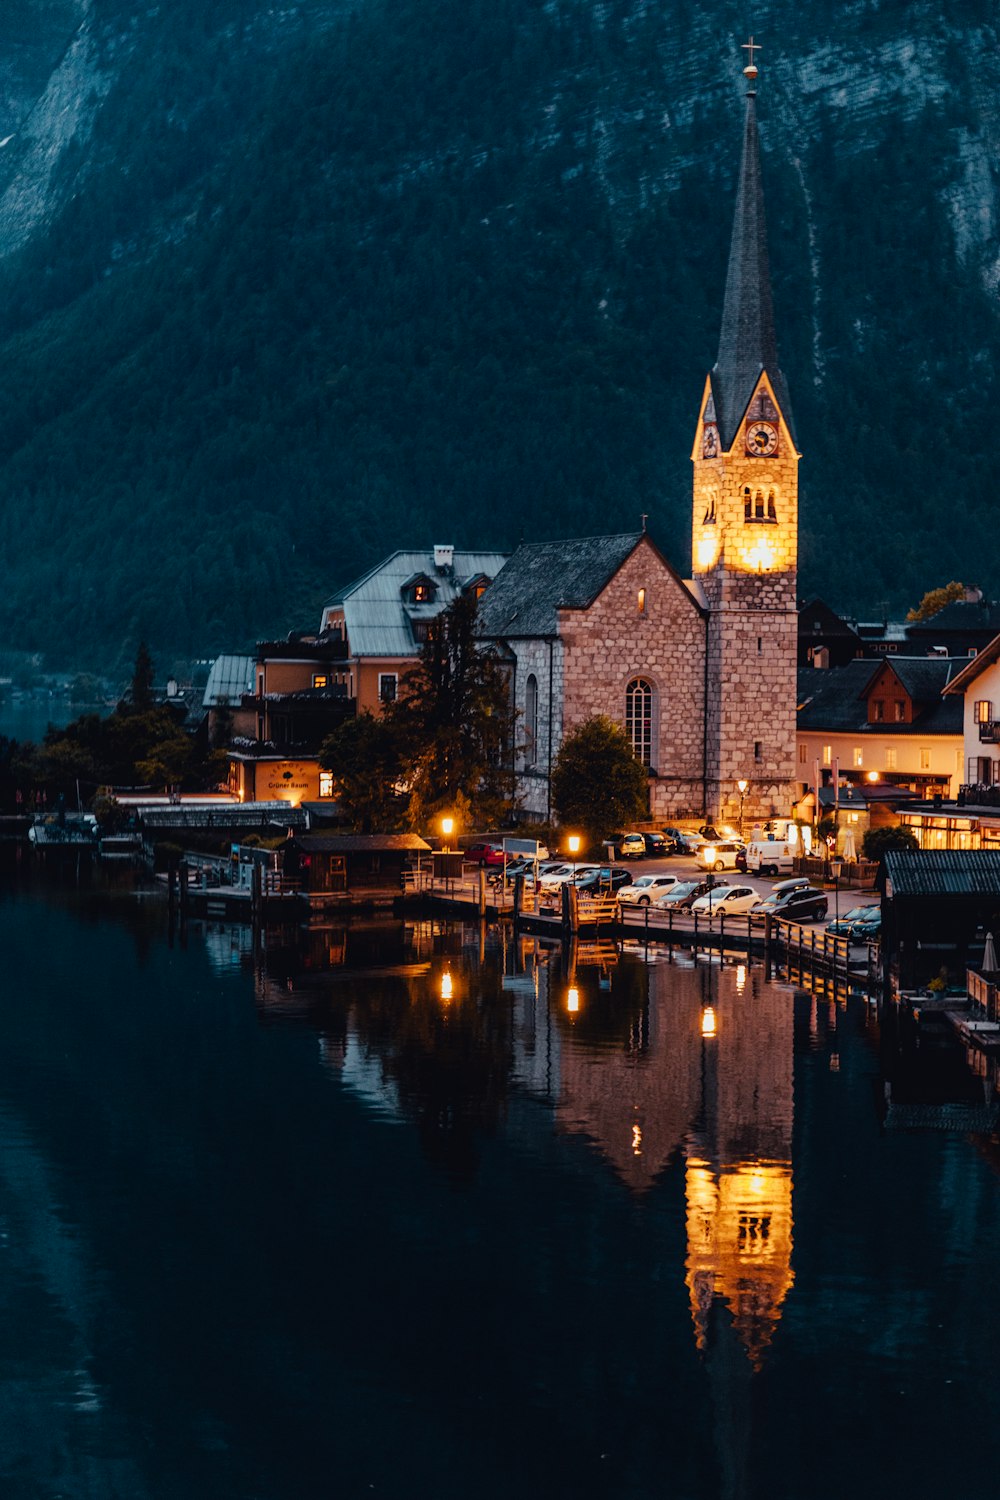 a church lit up at night on a lake